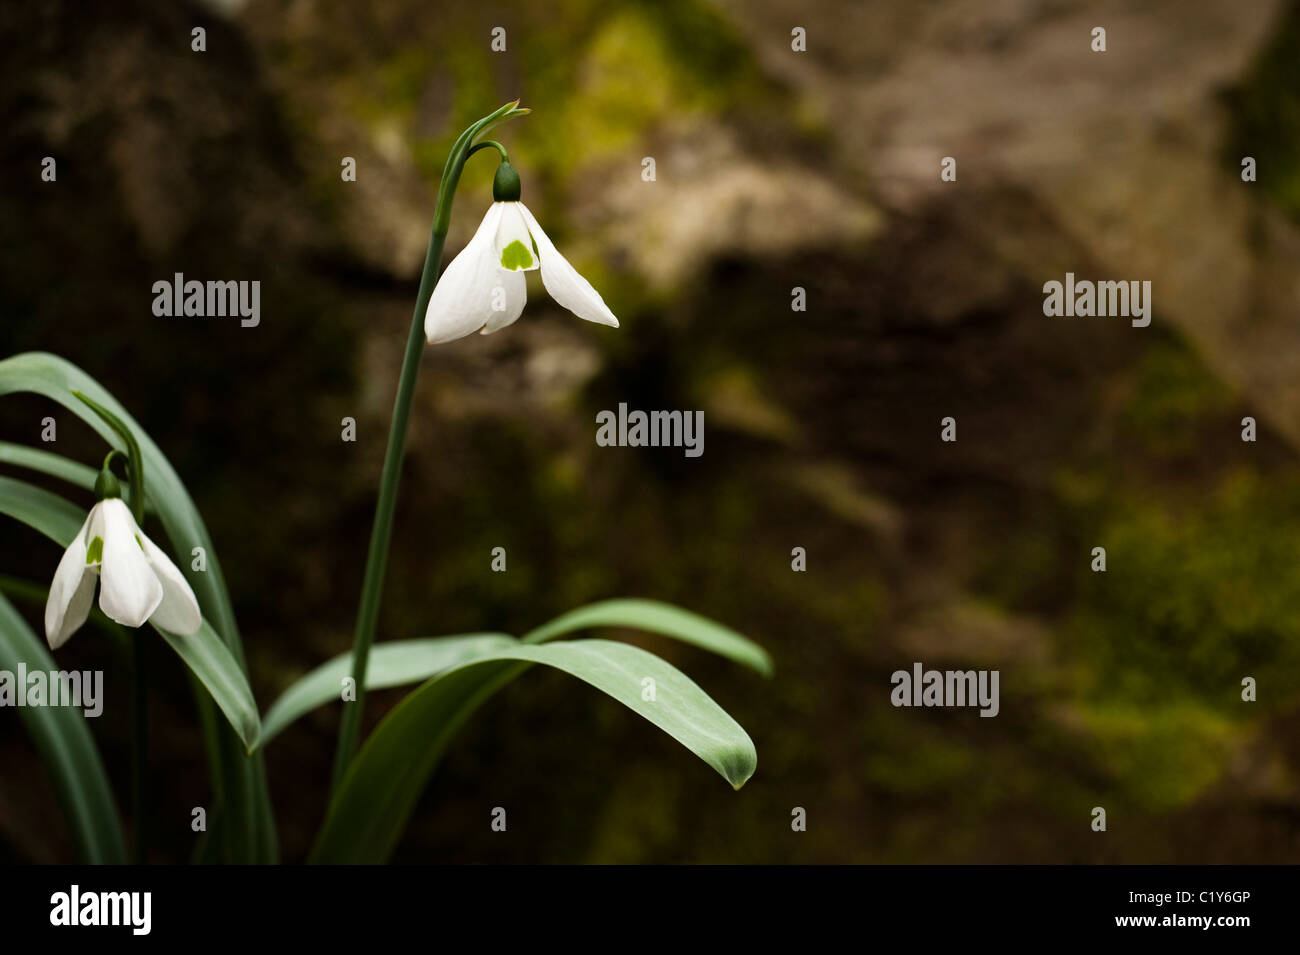 One-spotted Elwes's Snowdrop, Galanthus elwesii var. monostictus, in bloom Stock Photo